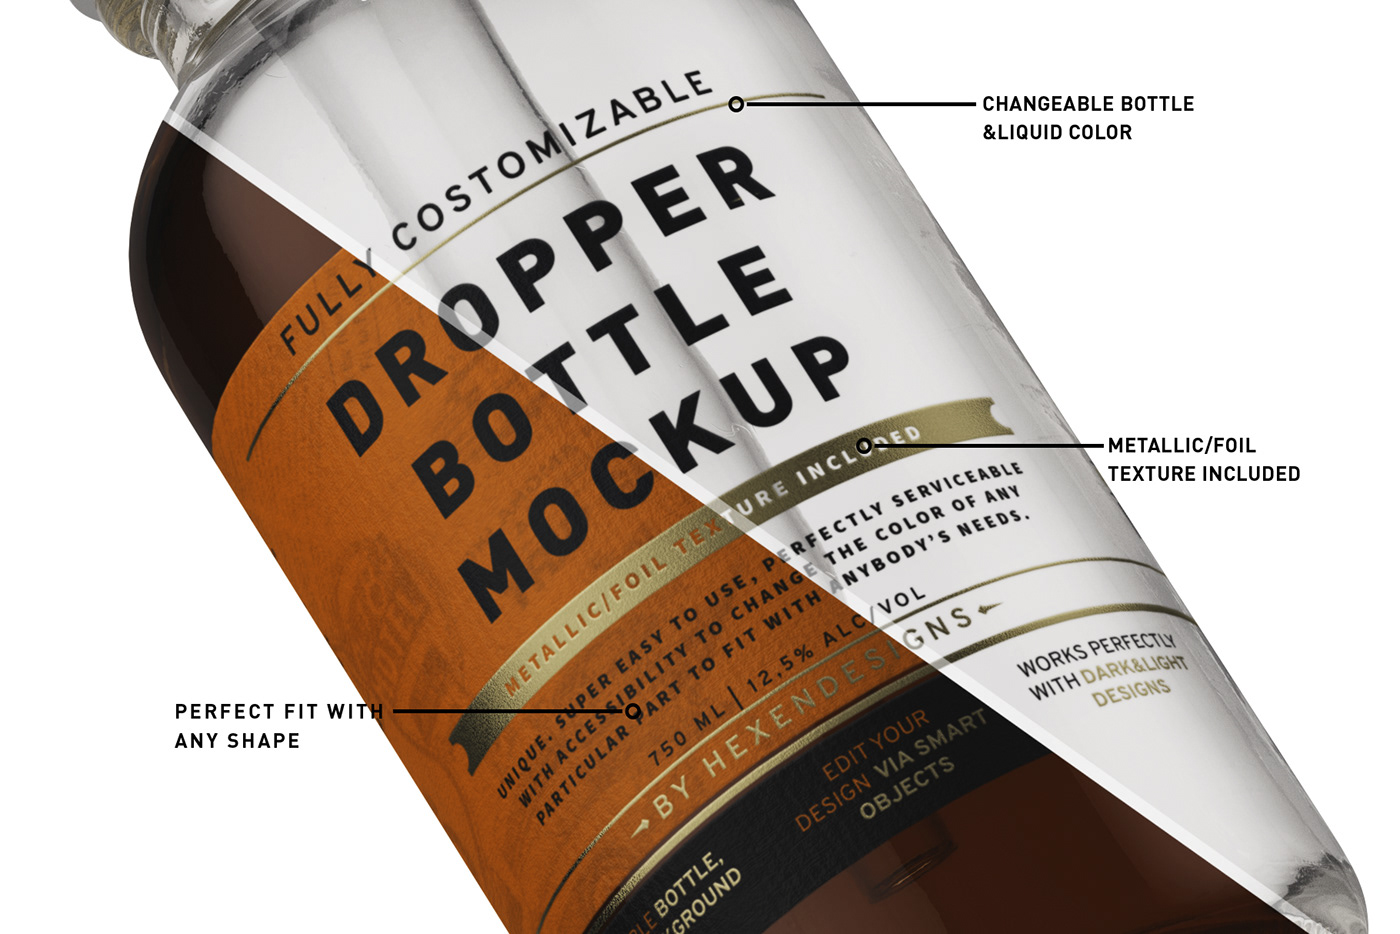 Dropper Bottle Mockup e-liquidbottle mockup eliquid e-juice label mockup hemp oil CBD oil essential oil 1oz bottle glass